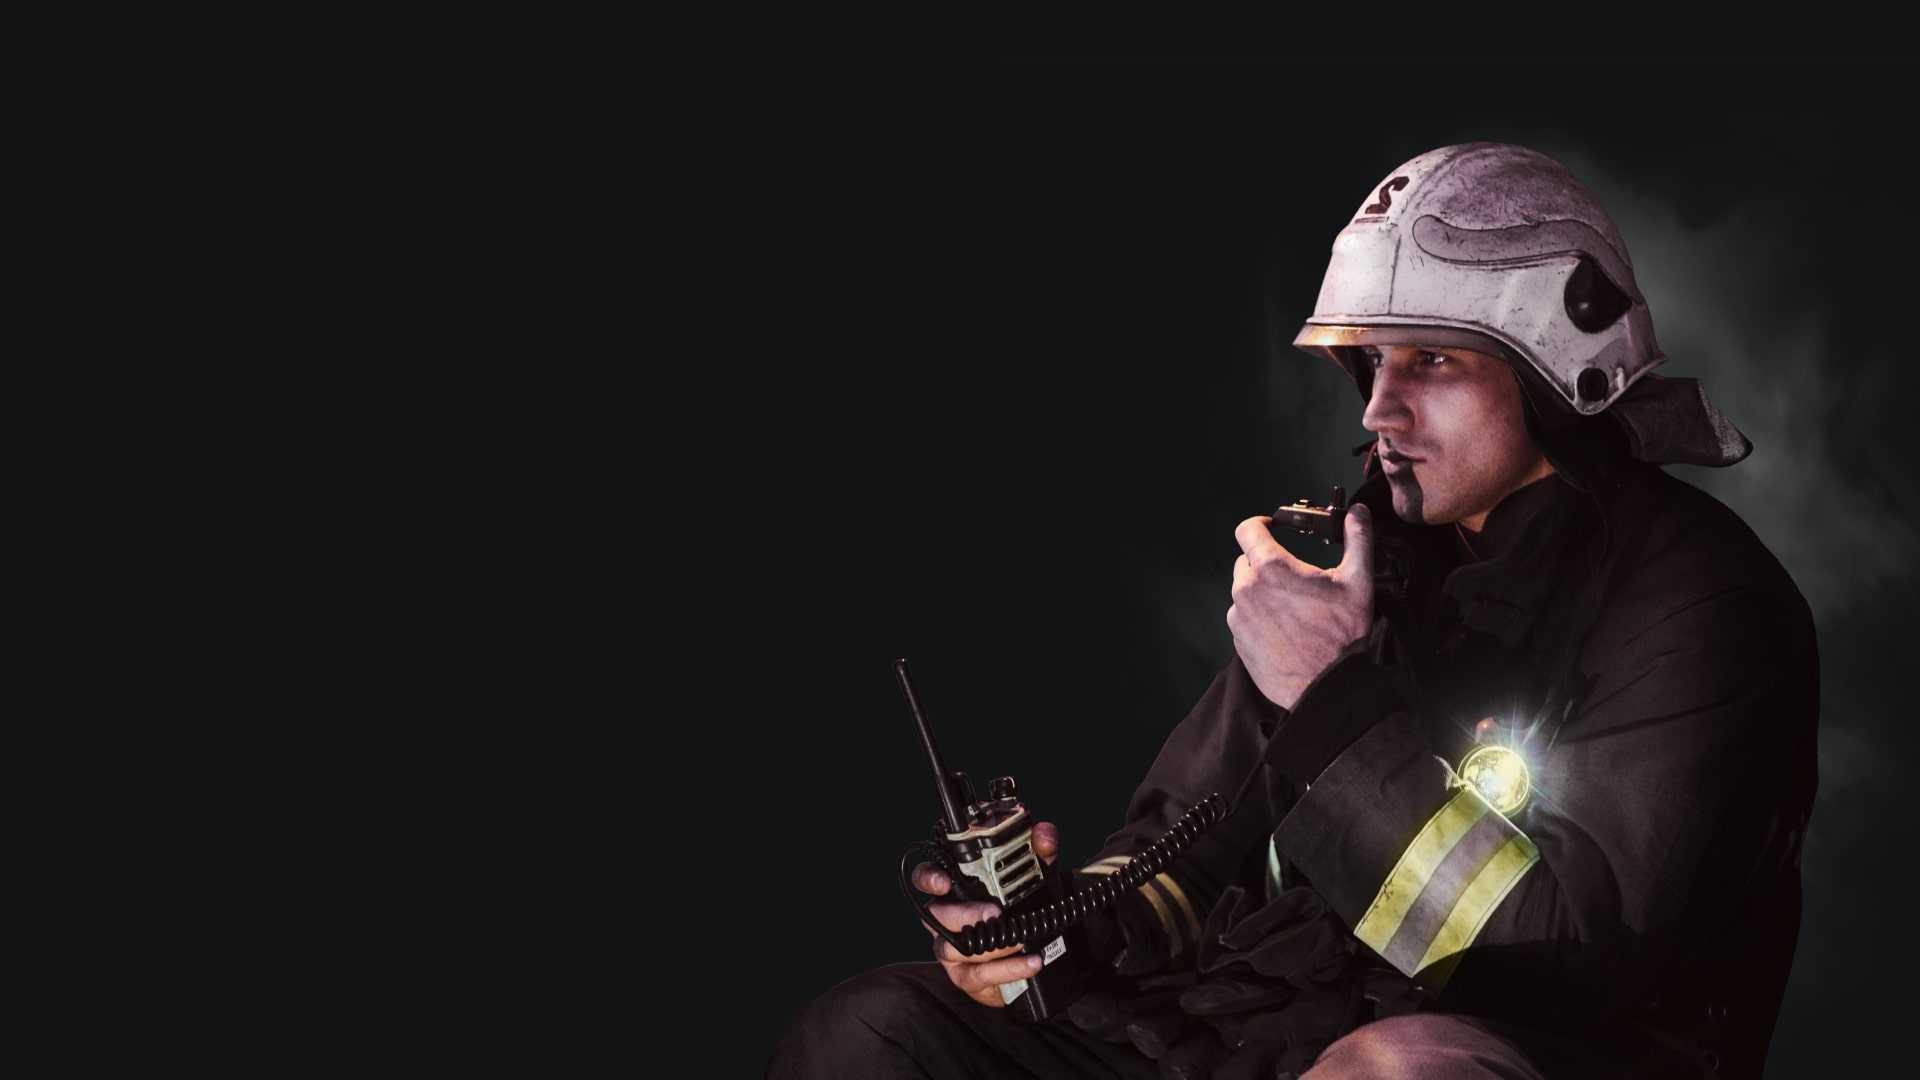 Firefighter communicating via radiostation